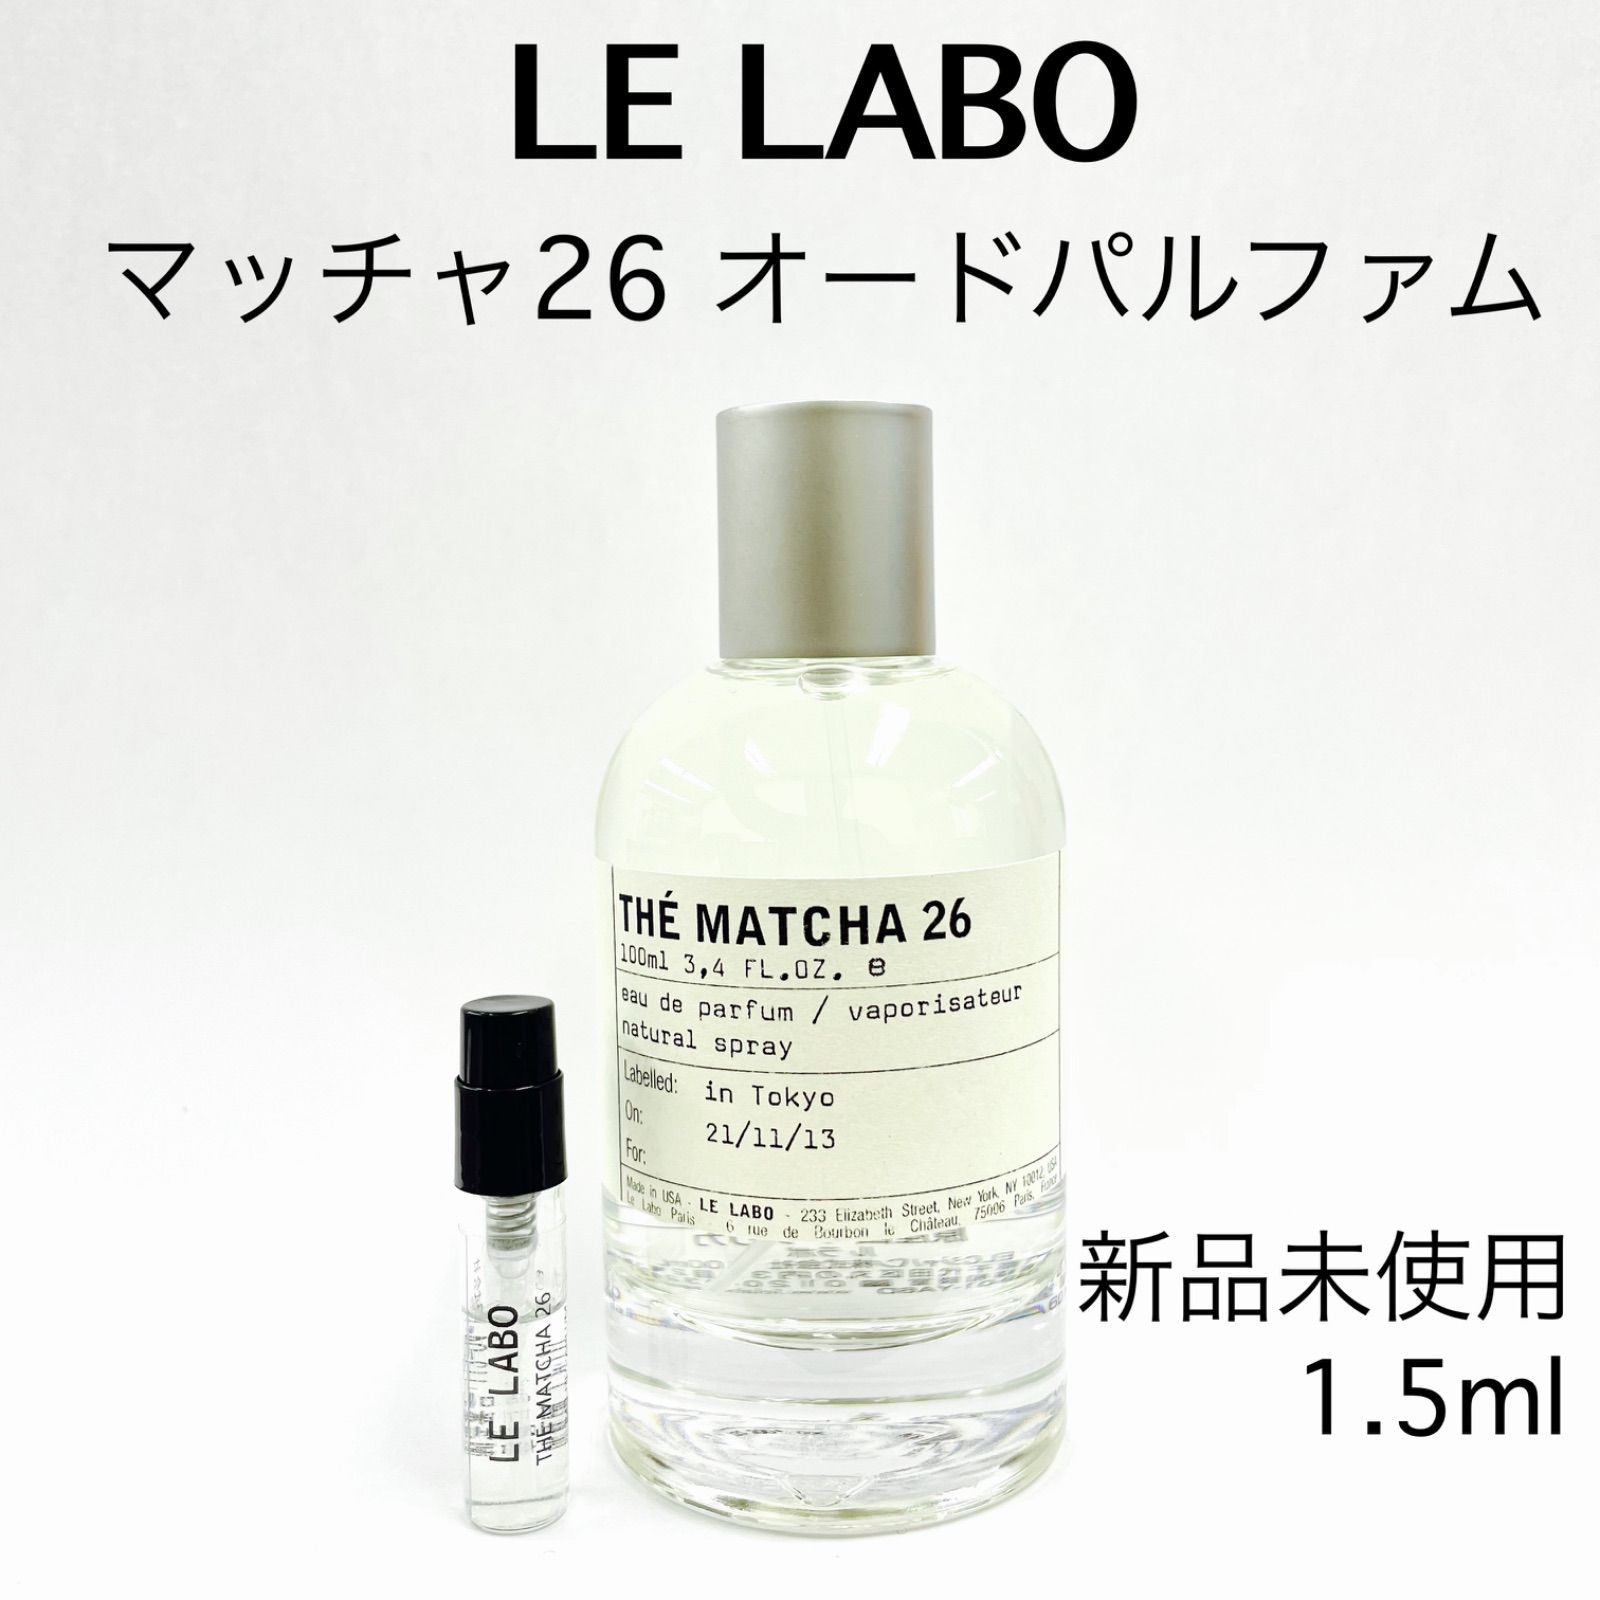 LELABO ルラボ マッチャ26 香水 1.5ml 最短即日発送